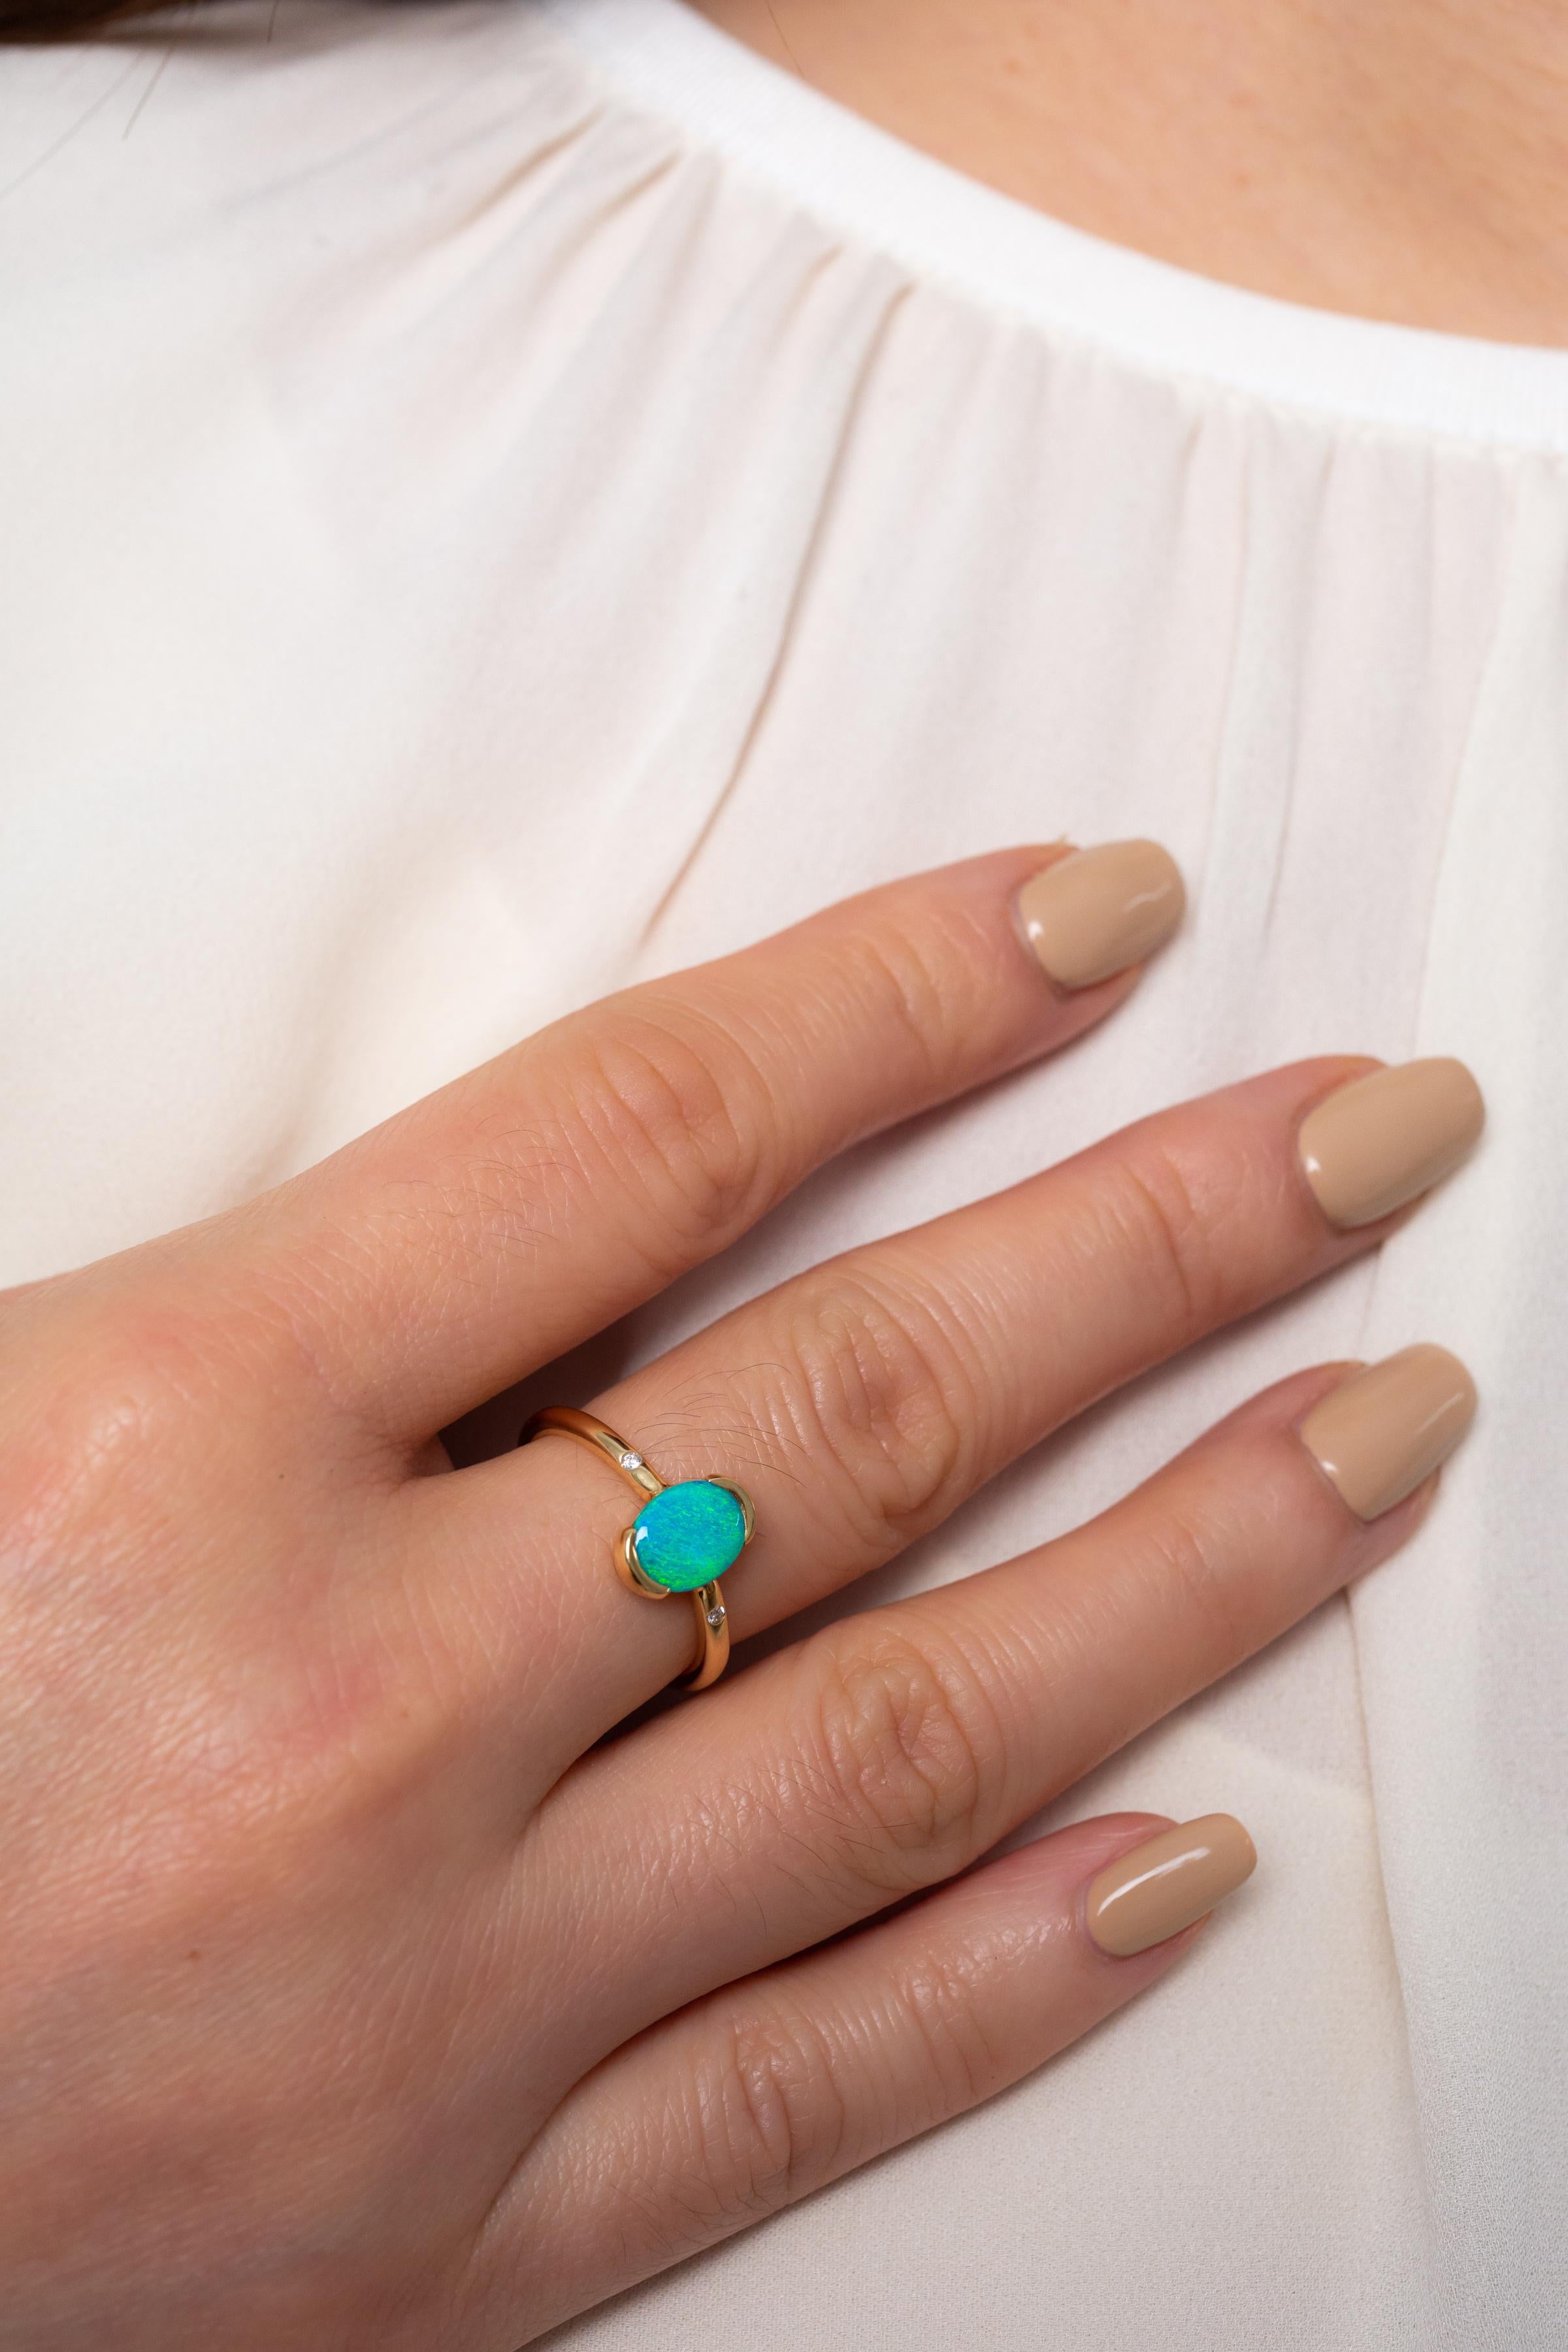 australian opal rings blue nile